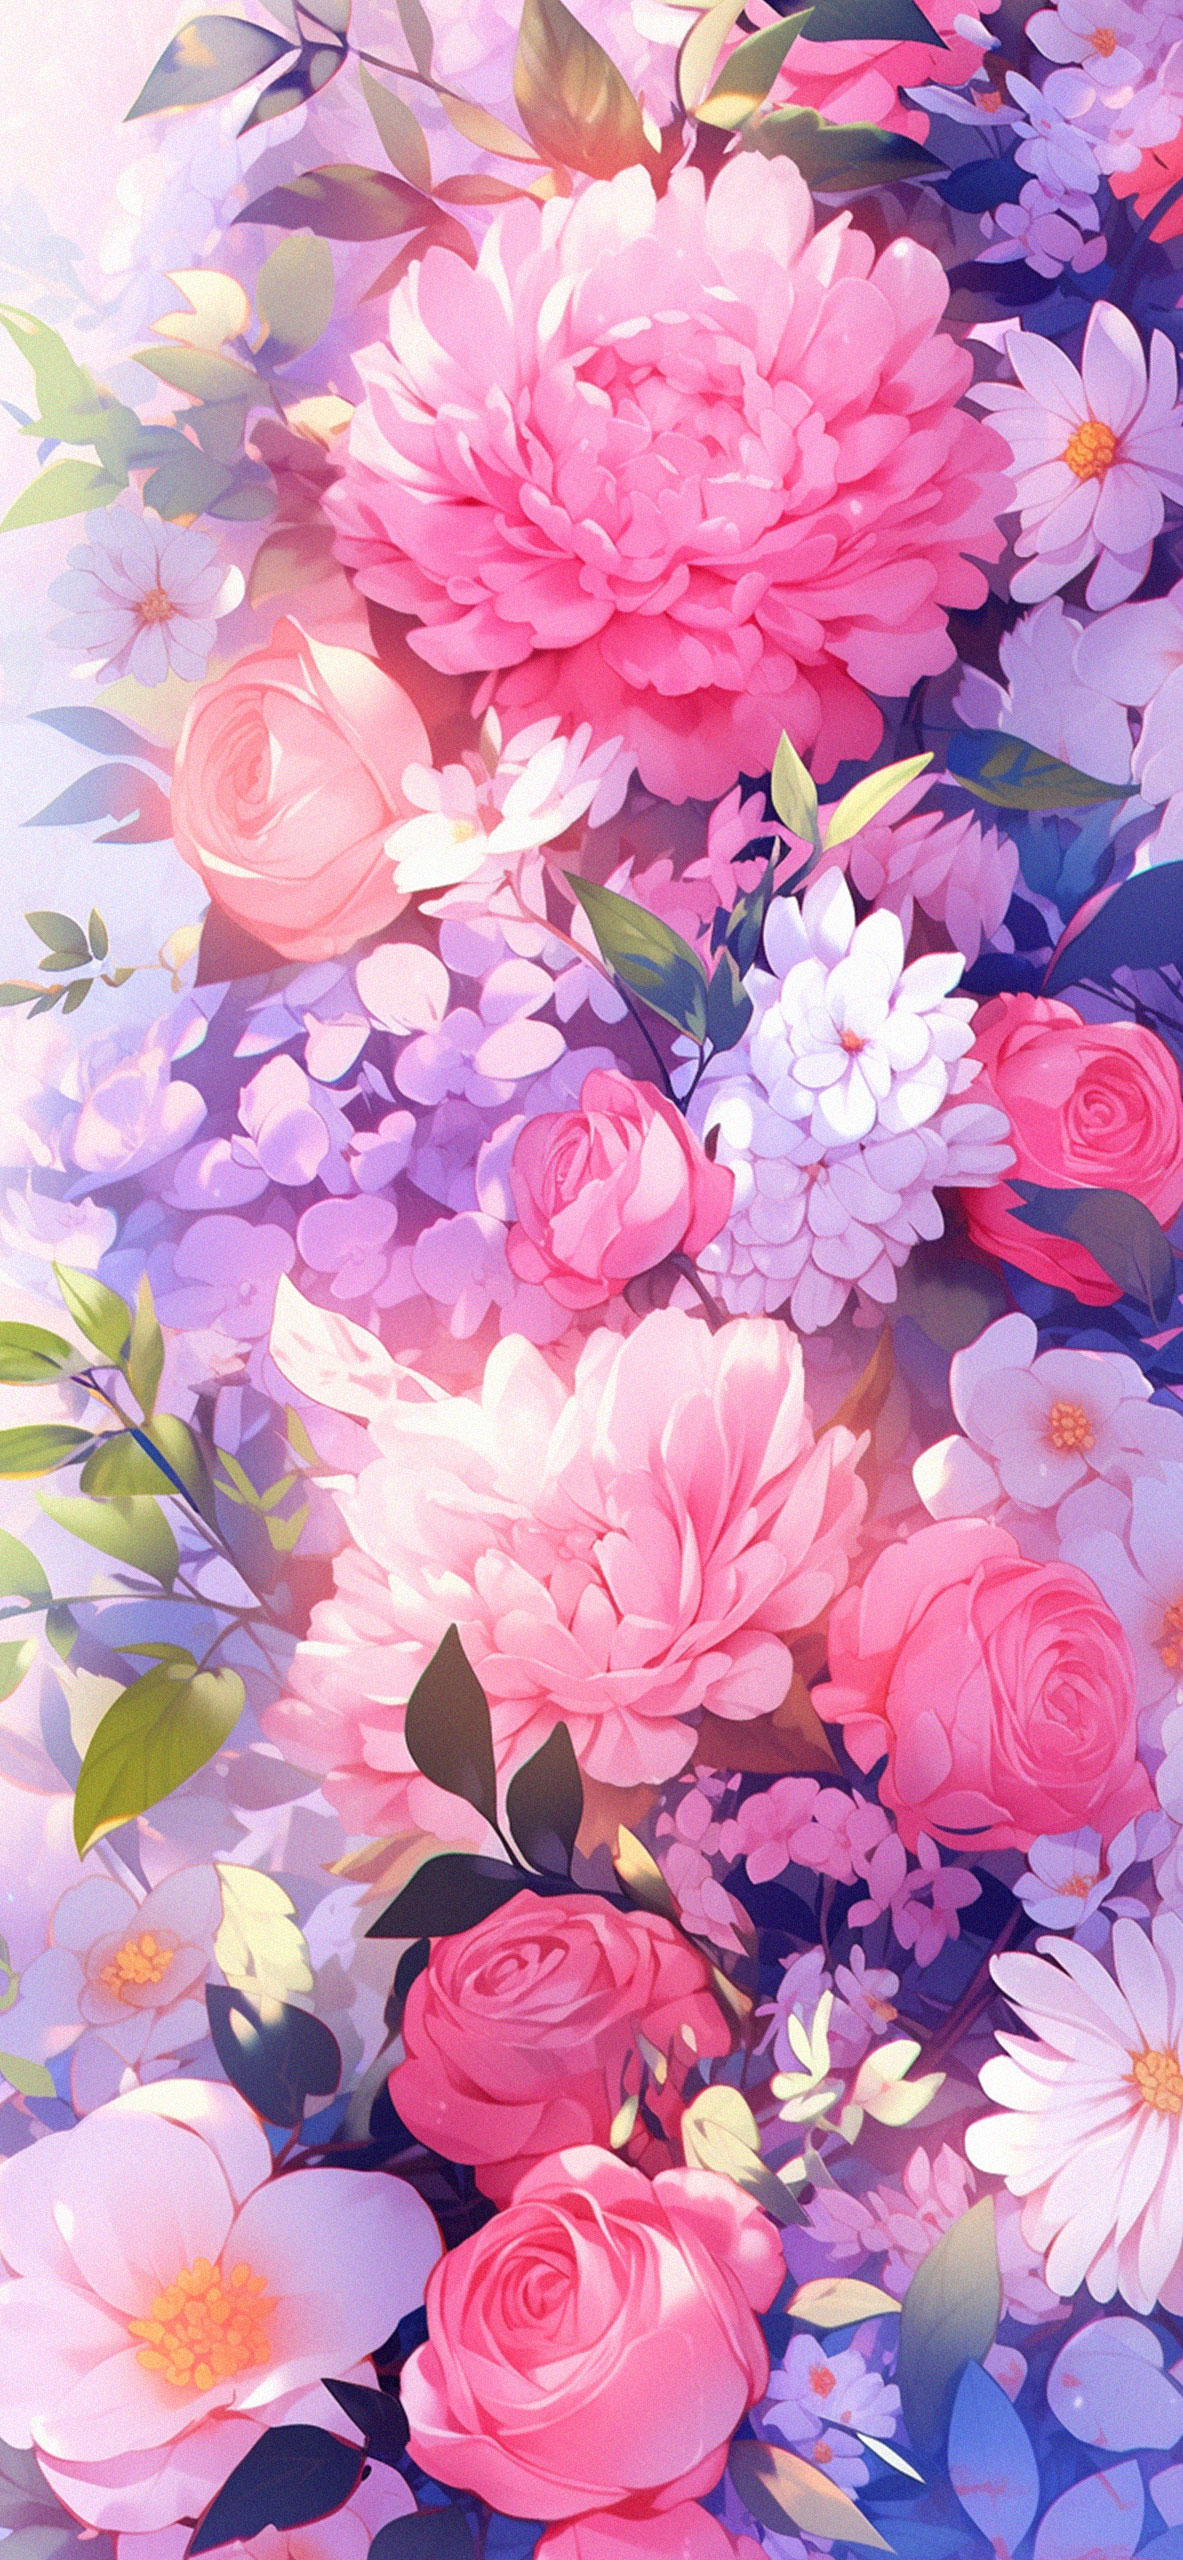 HD wallpaper Rose buds petals pink flowers blurring  Wallpaper Flare